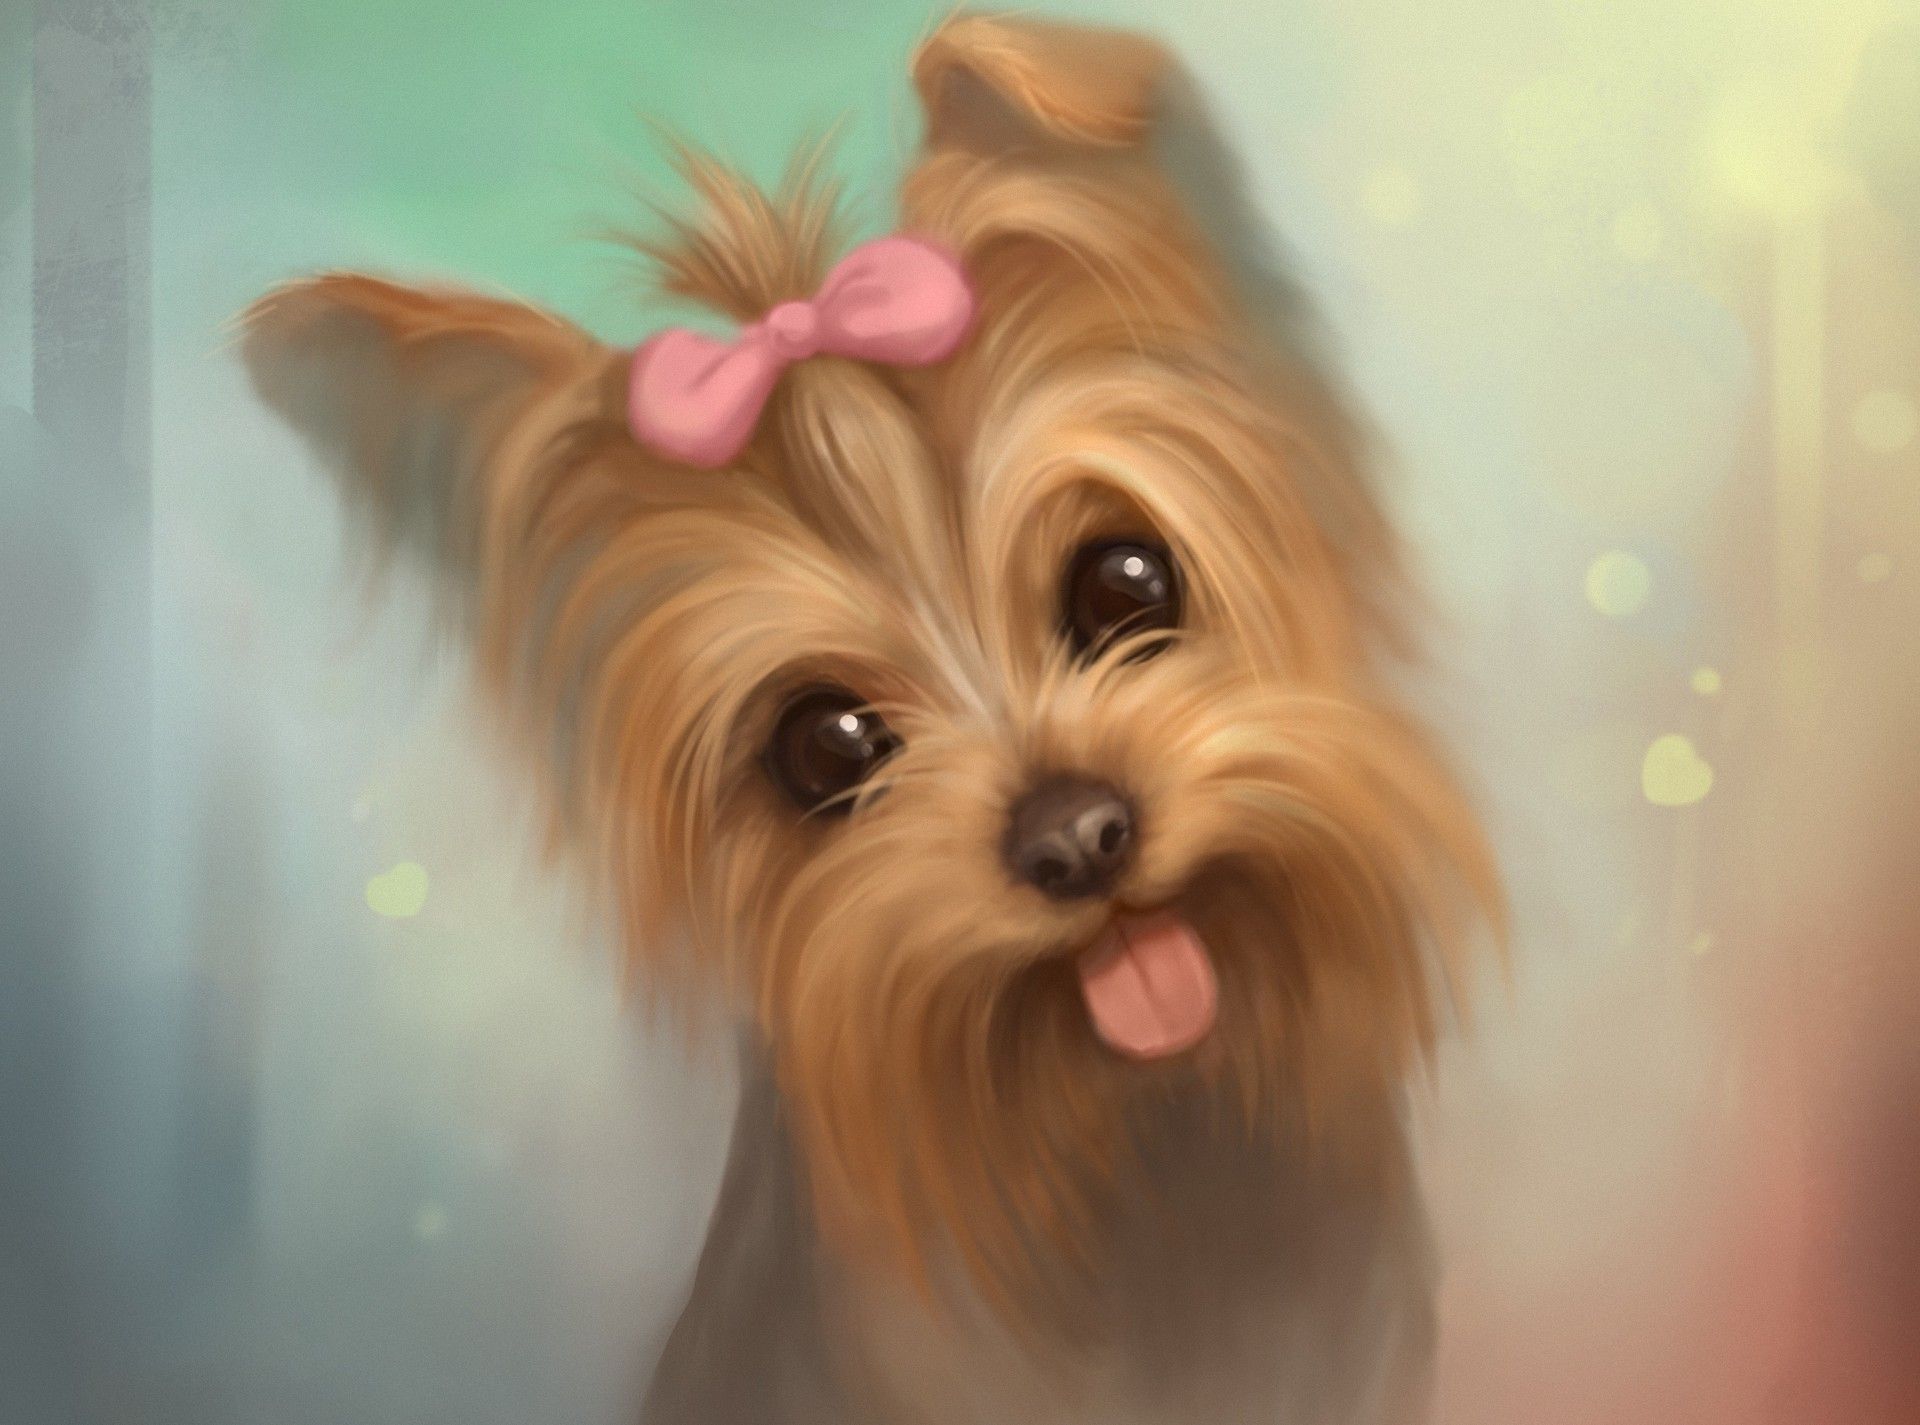 Cute Puppy Wallpaper Backgrounds. Cute Dogs Wallpaper Desktop